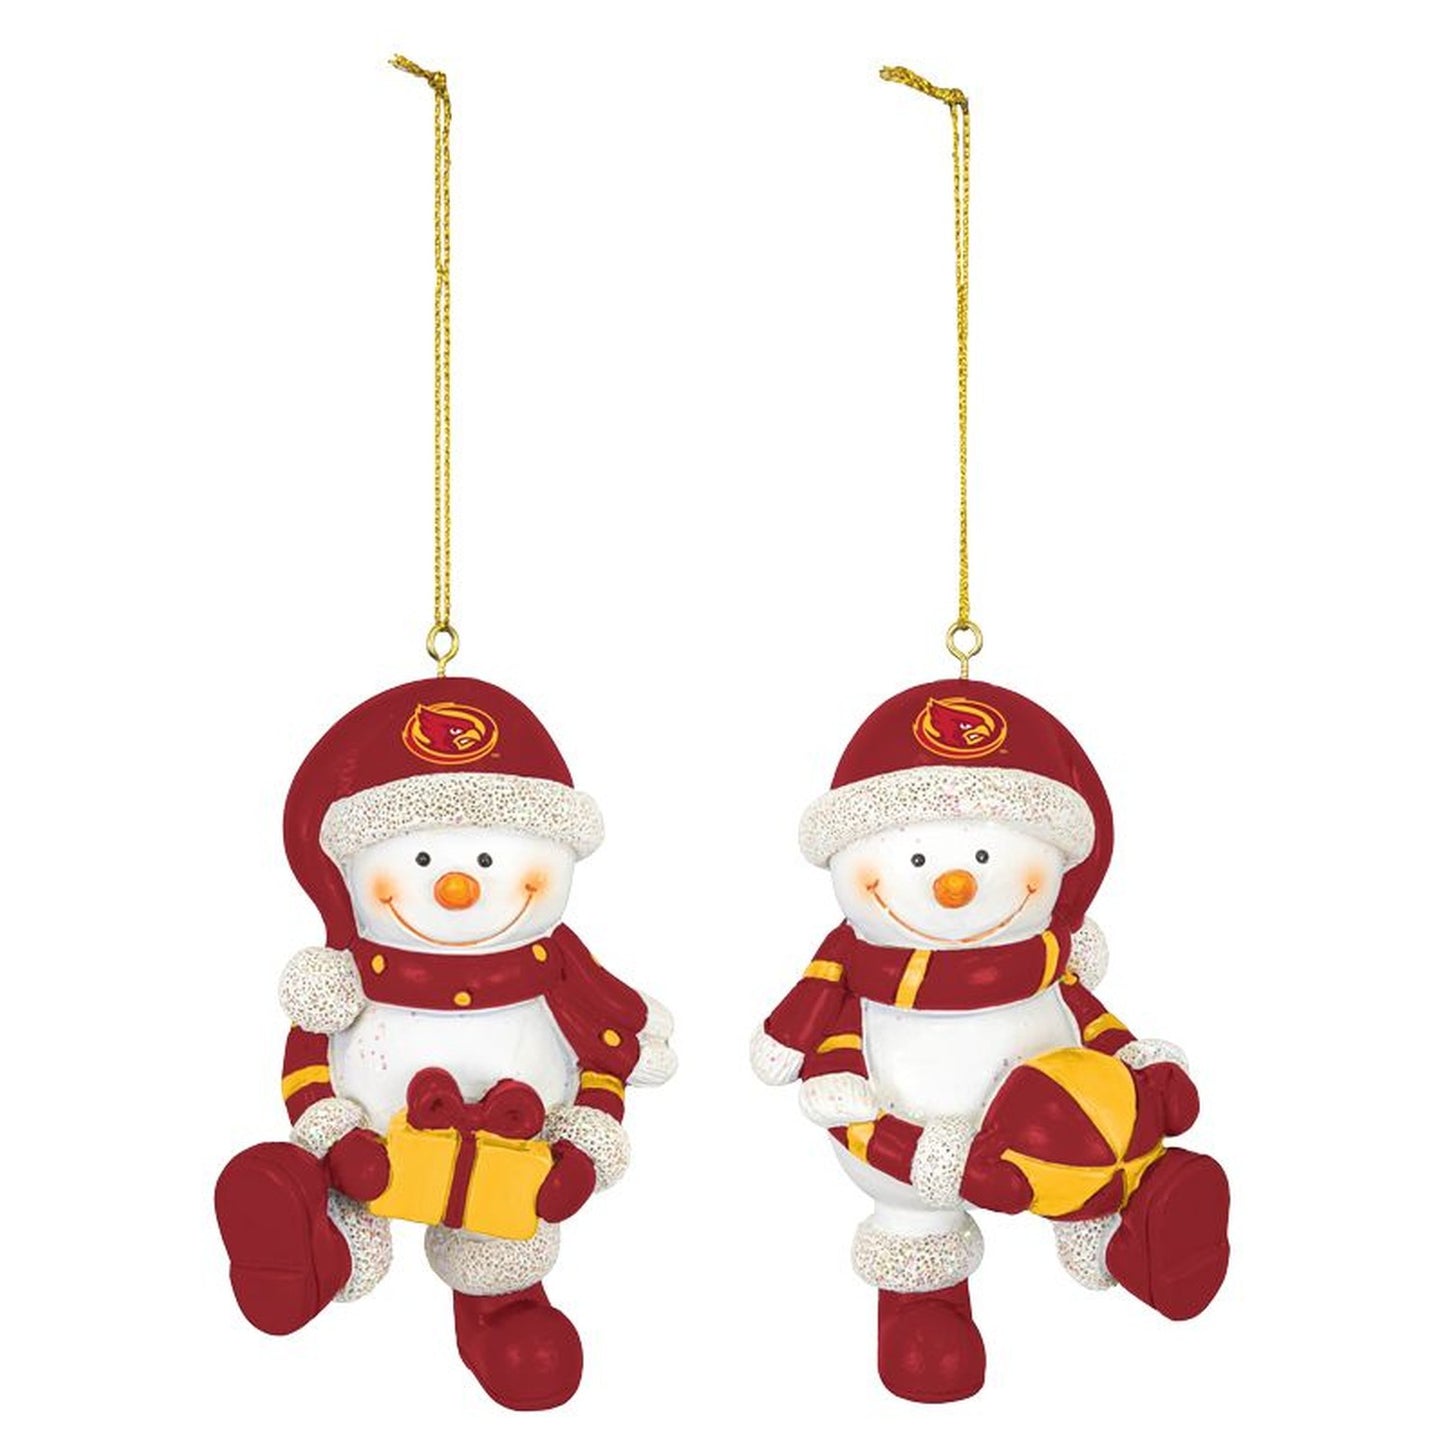 Hanna’s Handiworks Iowa State Resin Snowman Ornament Set Of 2 by Hanna’s Handiworks